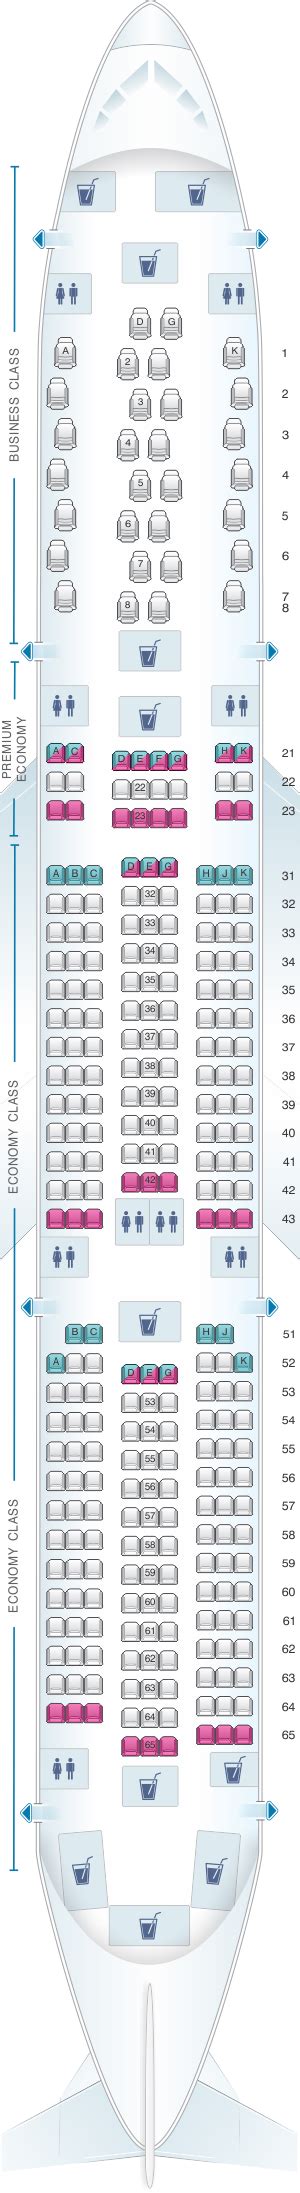 Airbus A350 Xwb Seating Charts Image To U